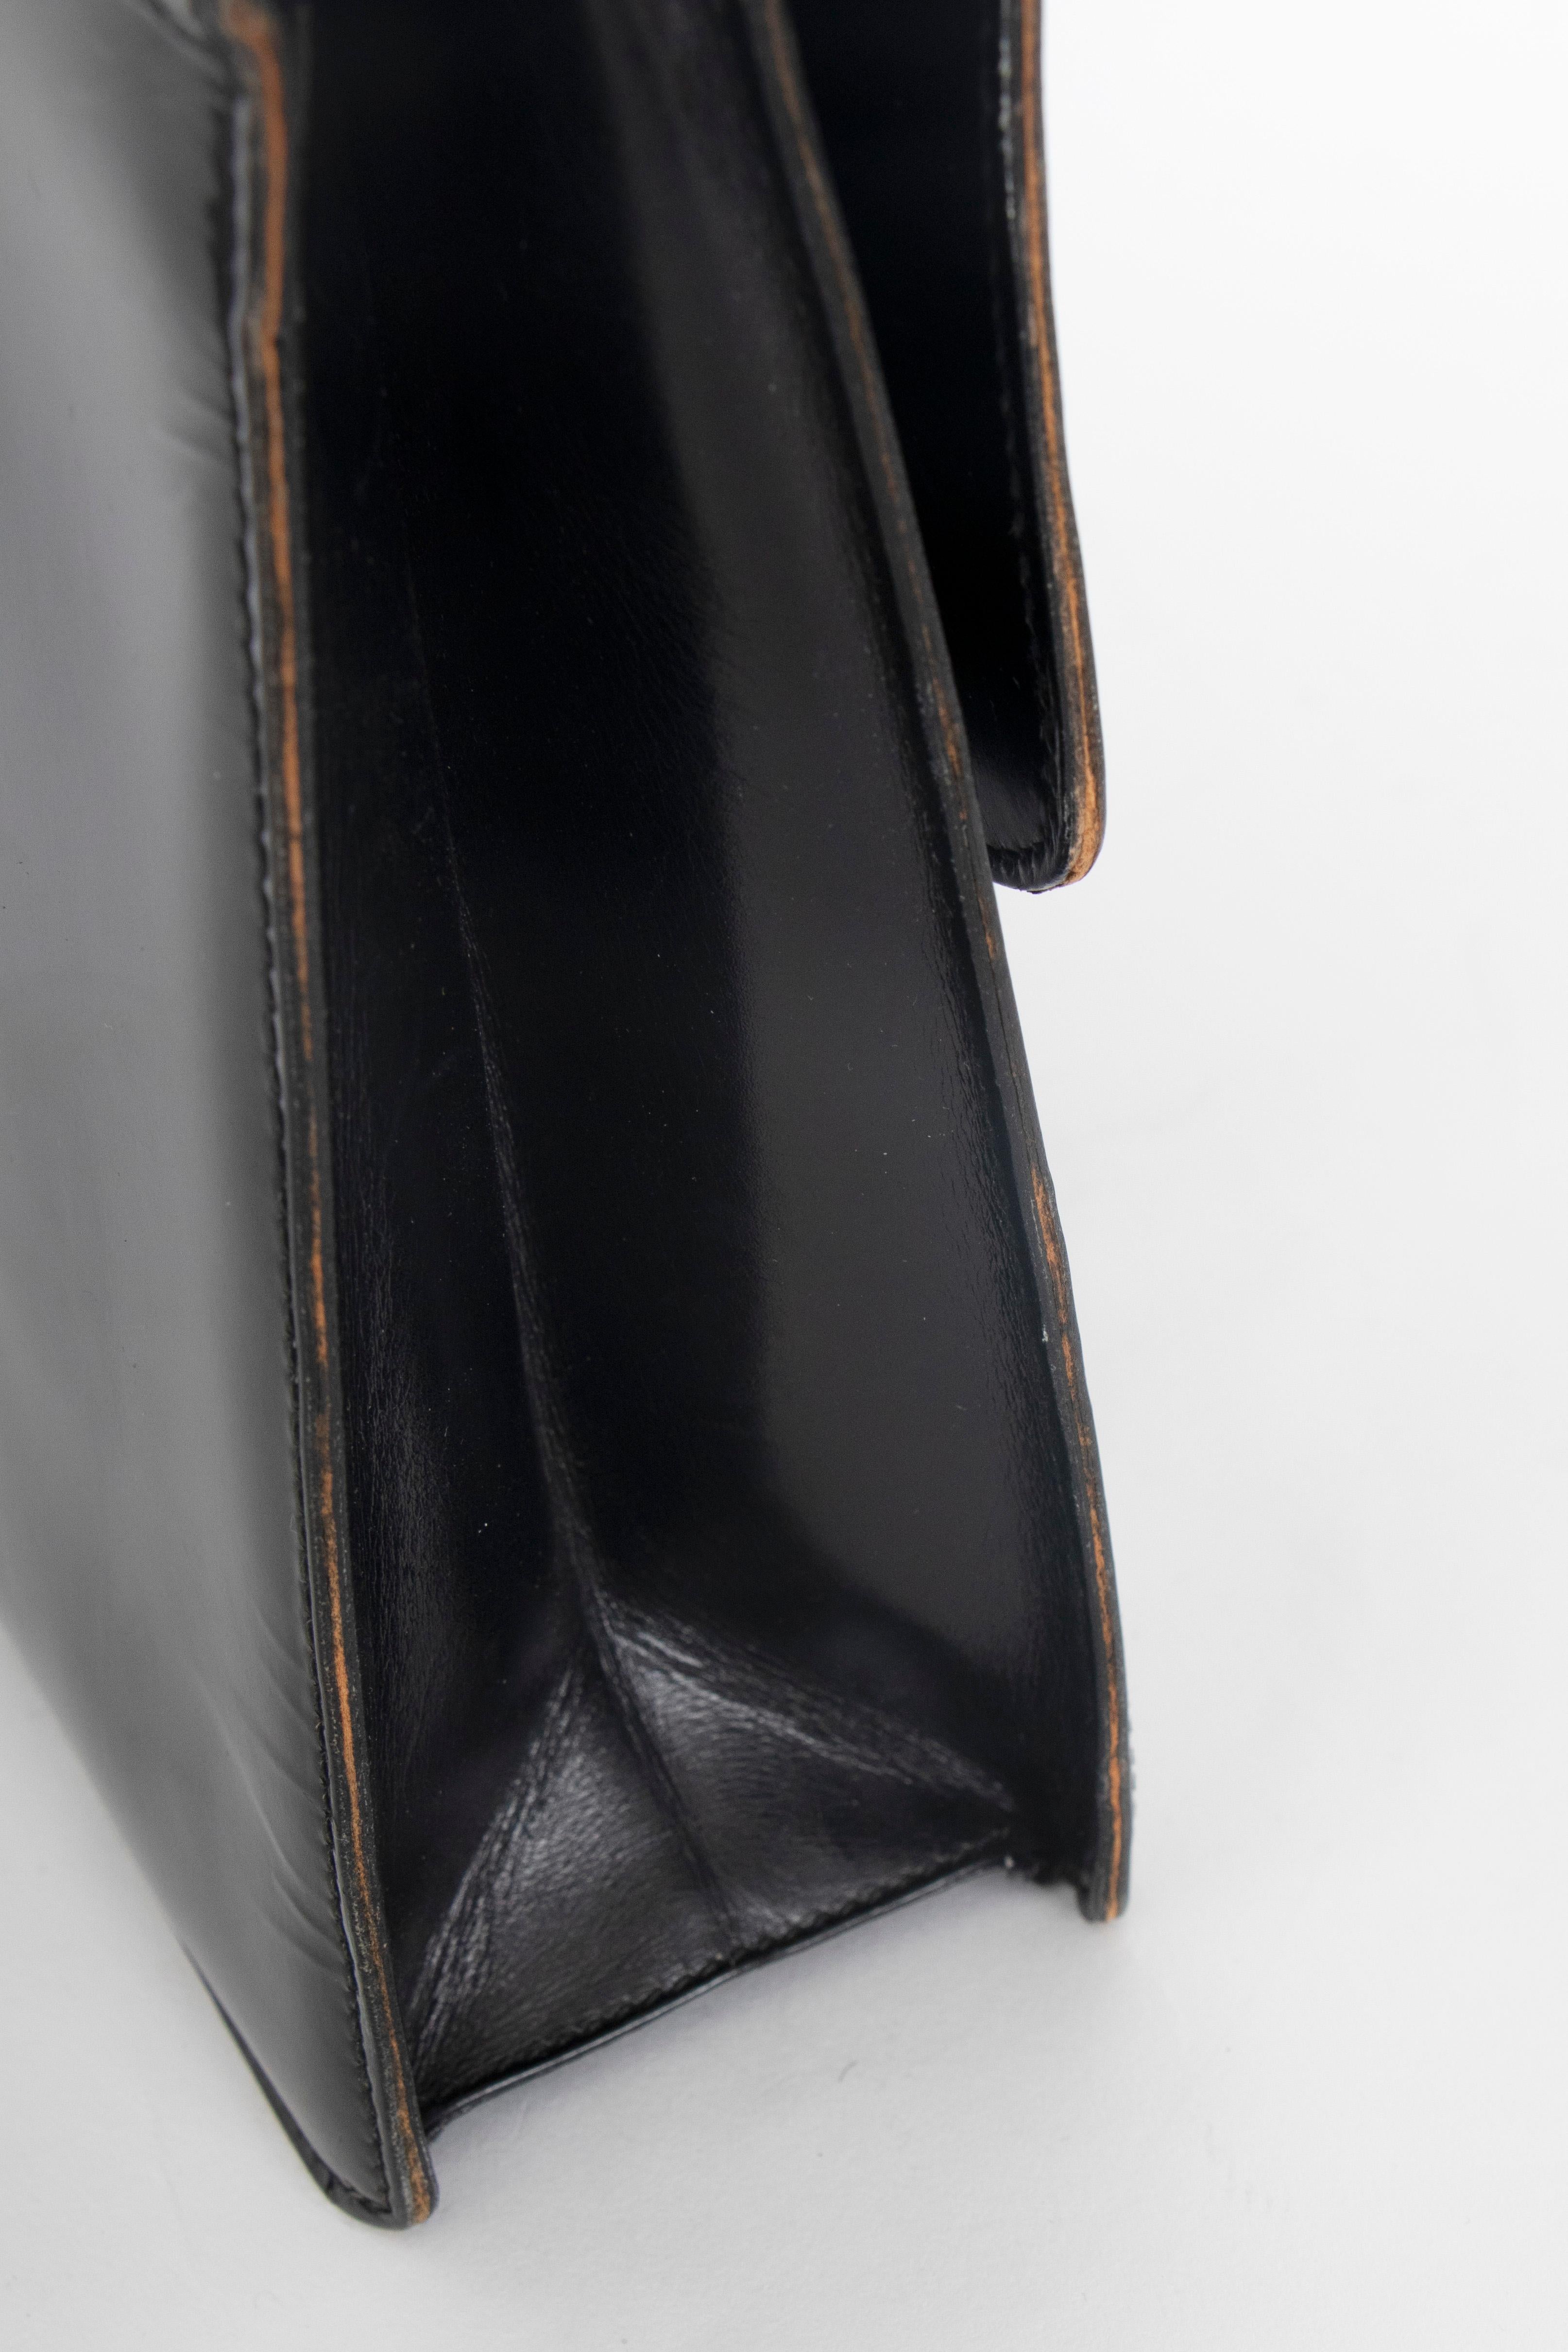 gucci black patent leather bag